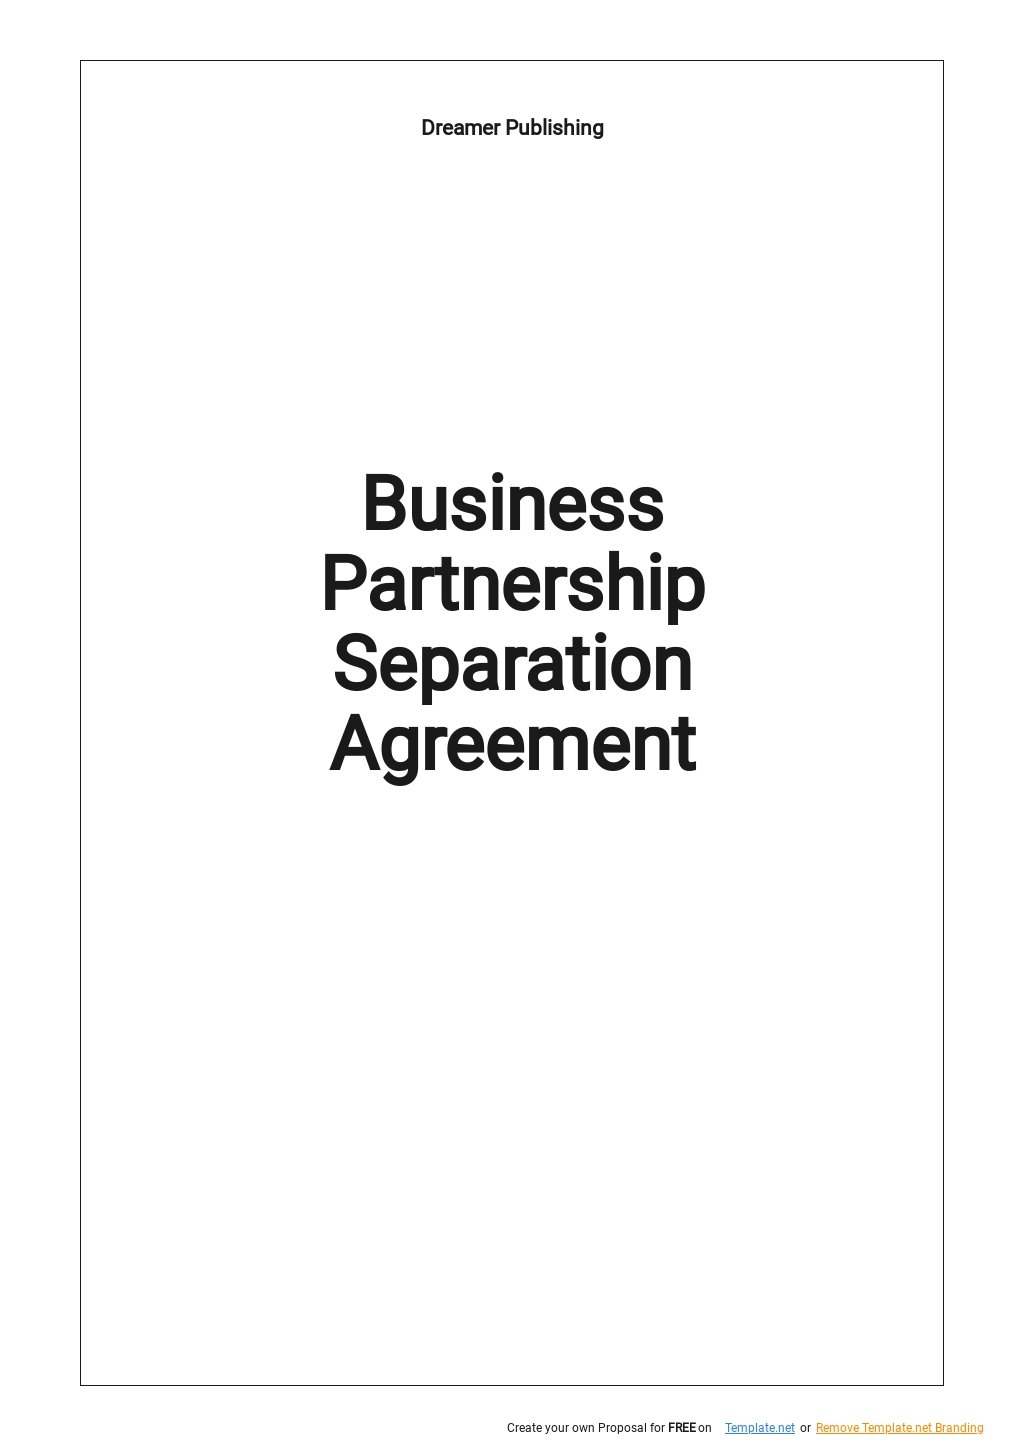 Business Partnership Separation Agreement Template 